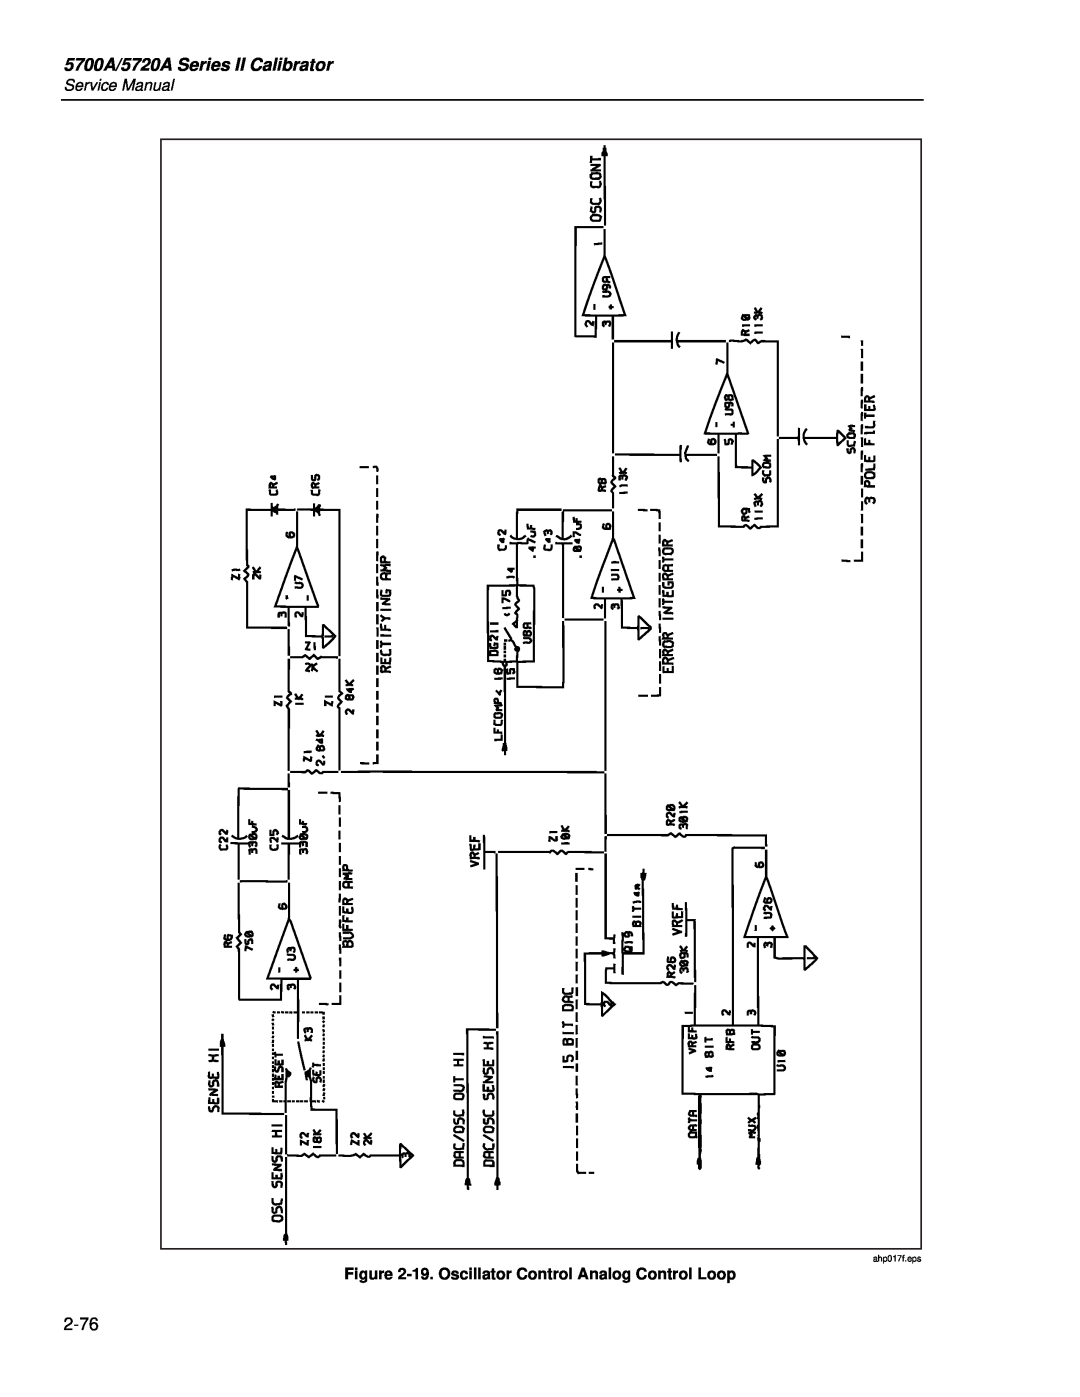 Fluke service manual 5700A/5720A Series II Calibrator, 19. Oscillator Control Analog Control Loop, ahp017f.eps 